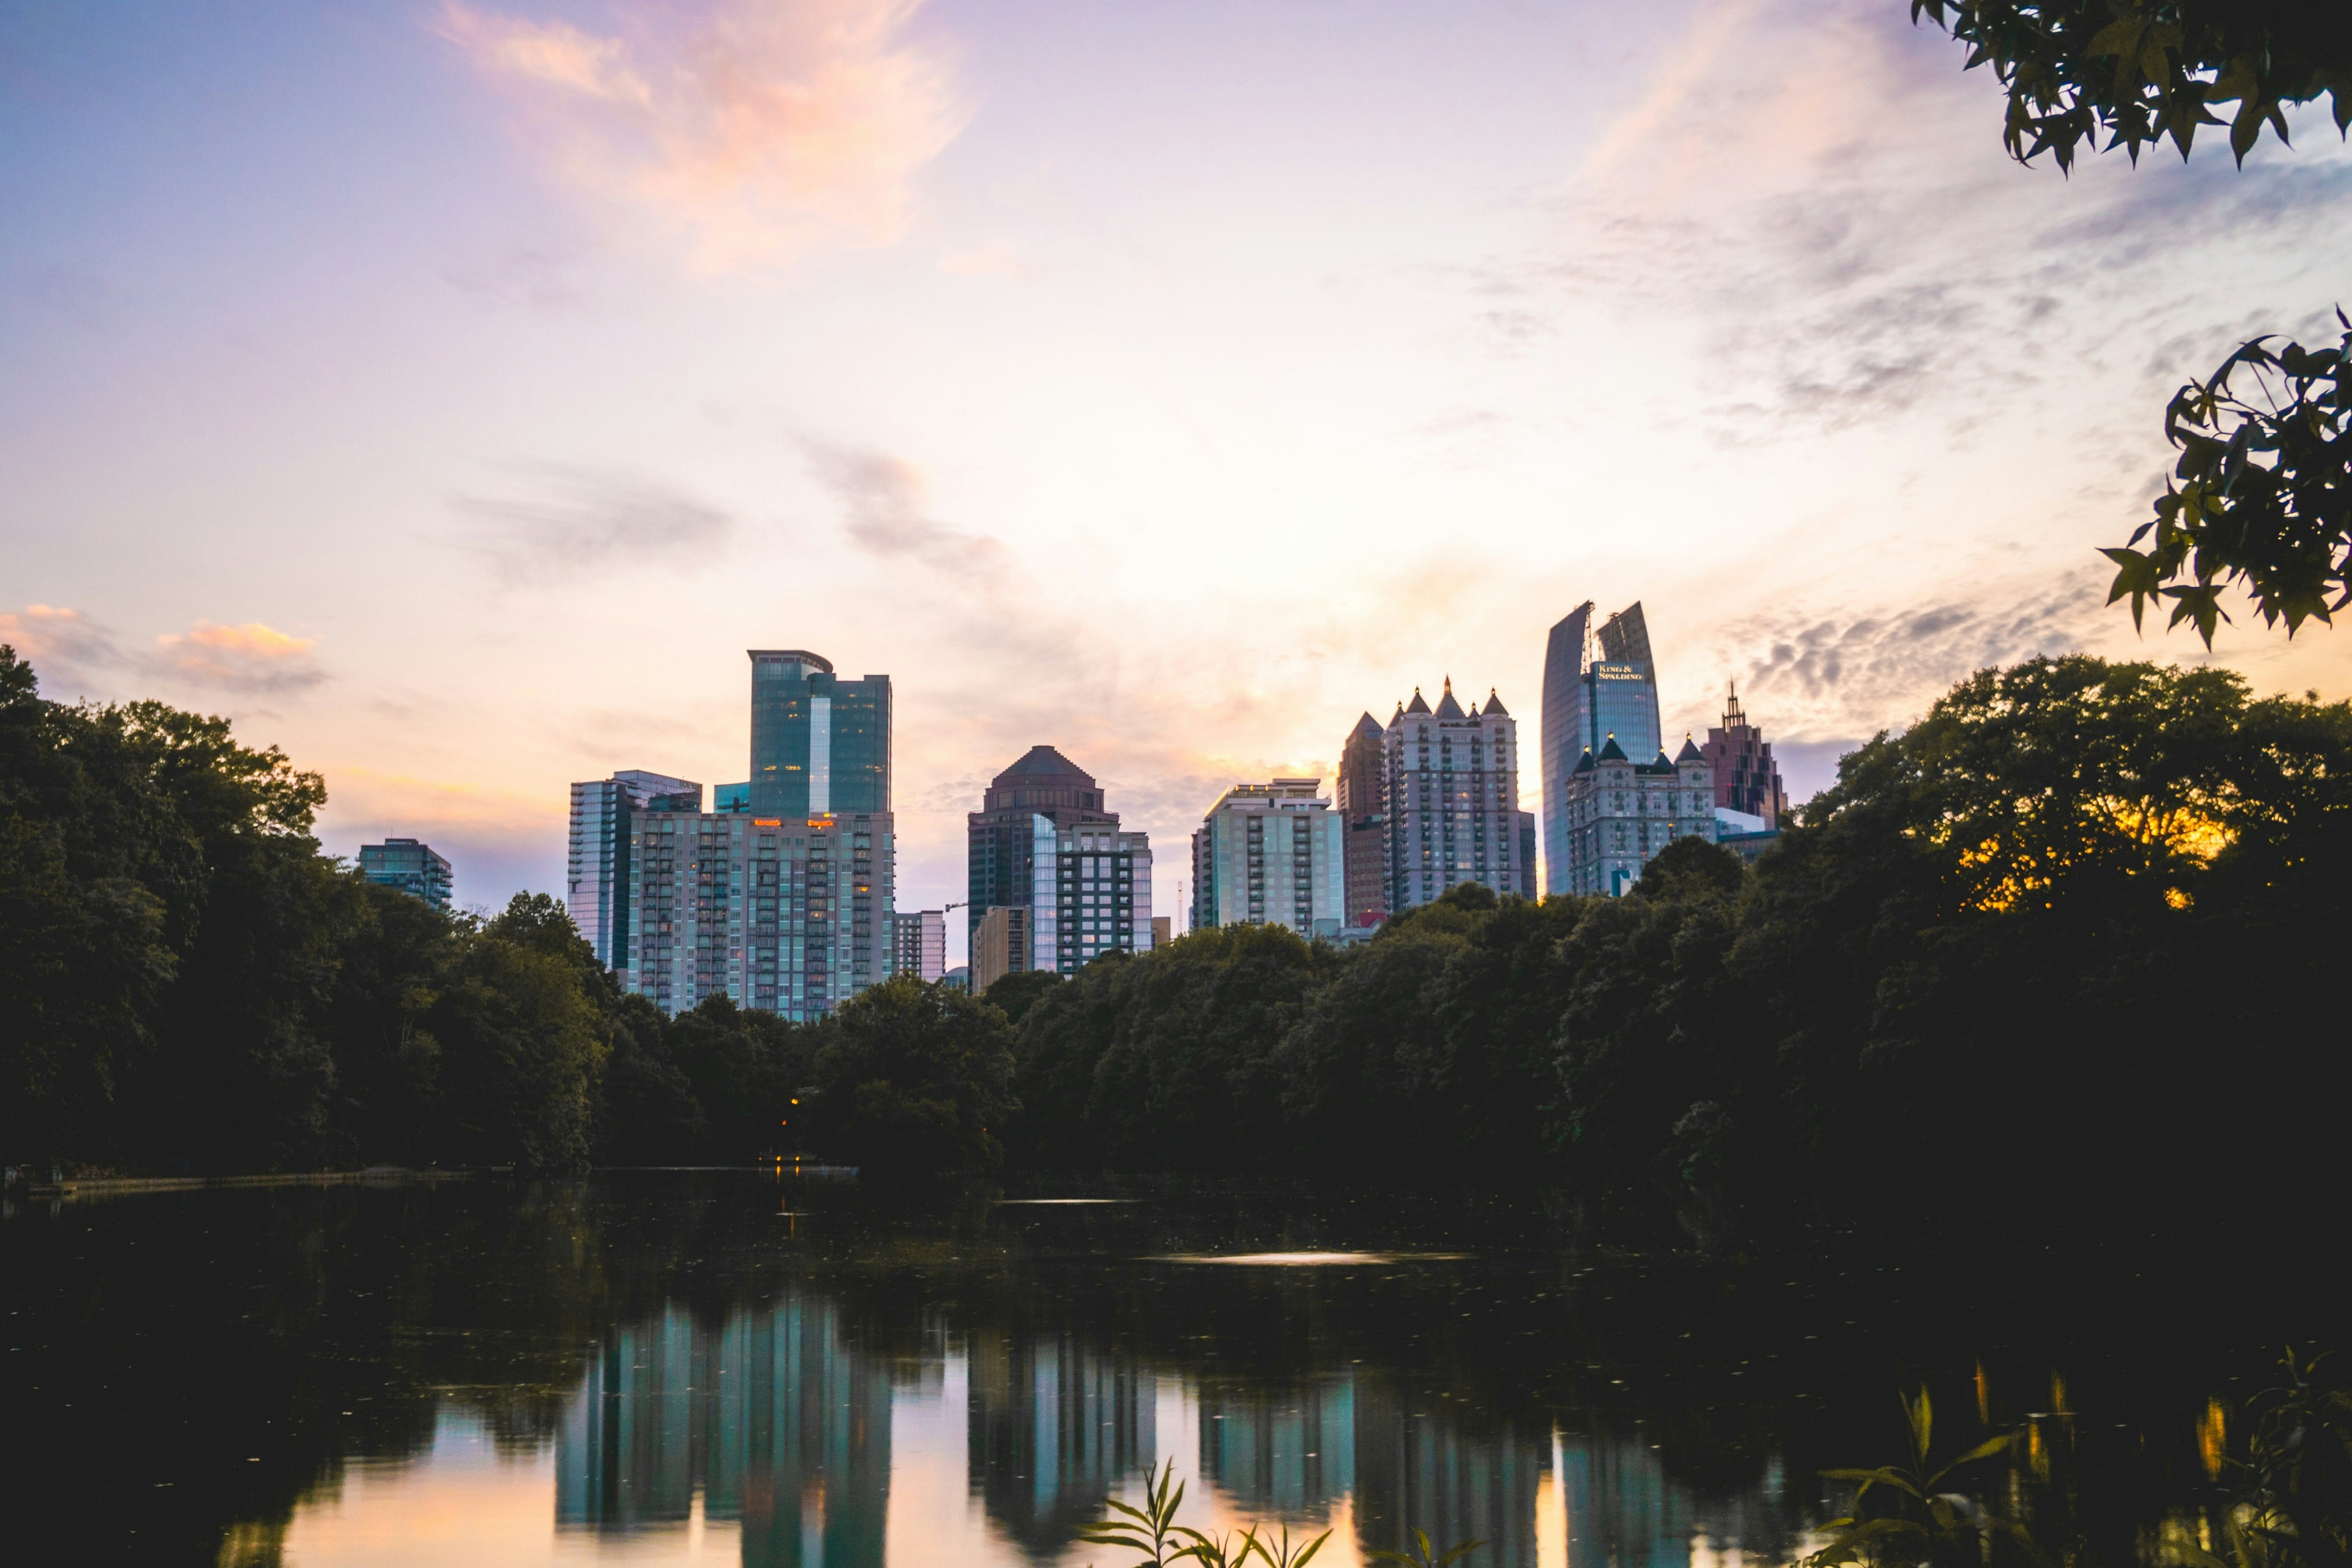 A sunset over Atlanta, GA